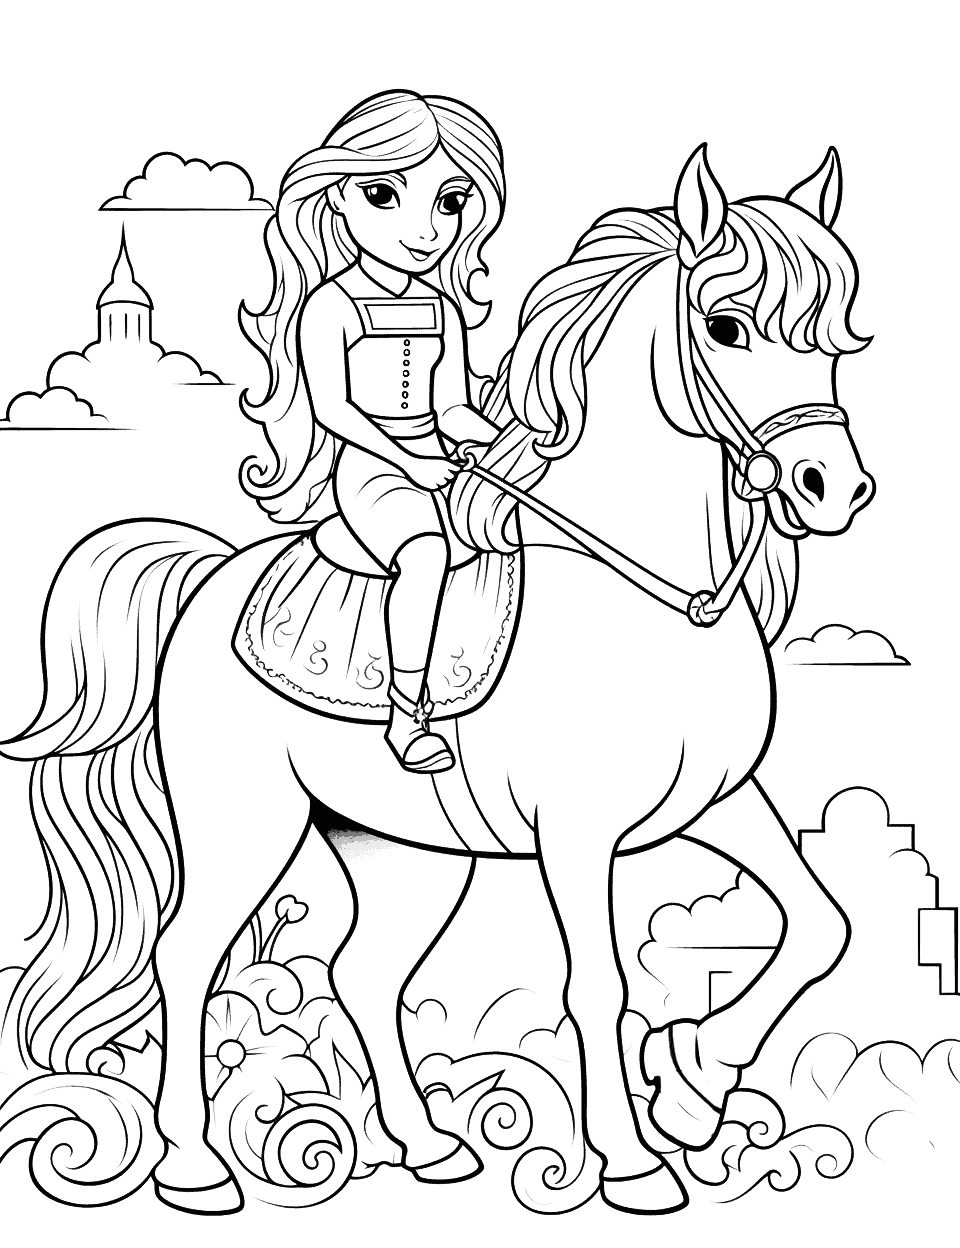 Princess on Unicorn Coloring Page - A fairy tale scene with a princess riding a unicorn across a rainbow.